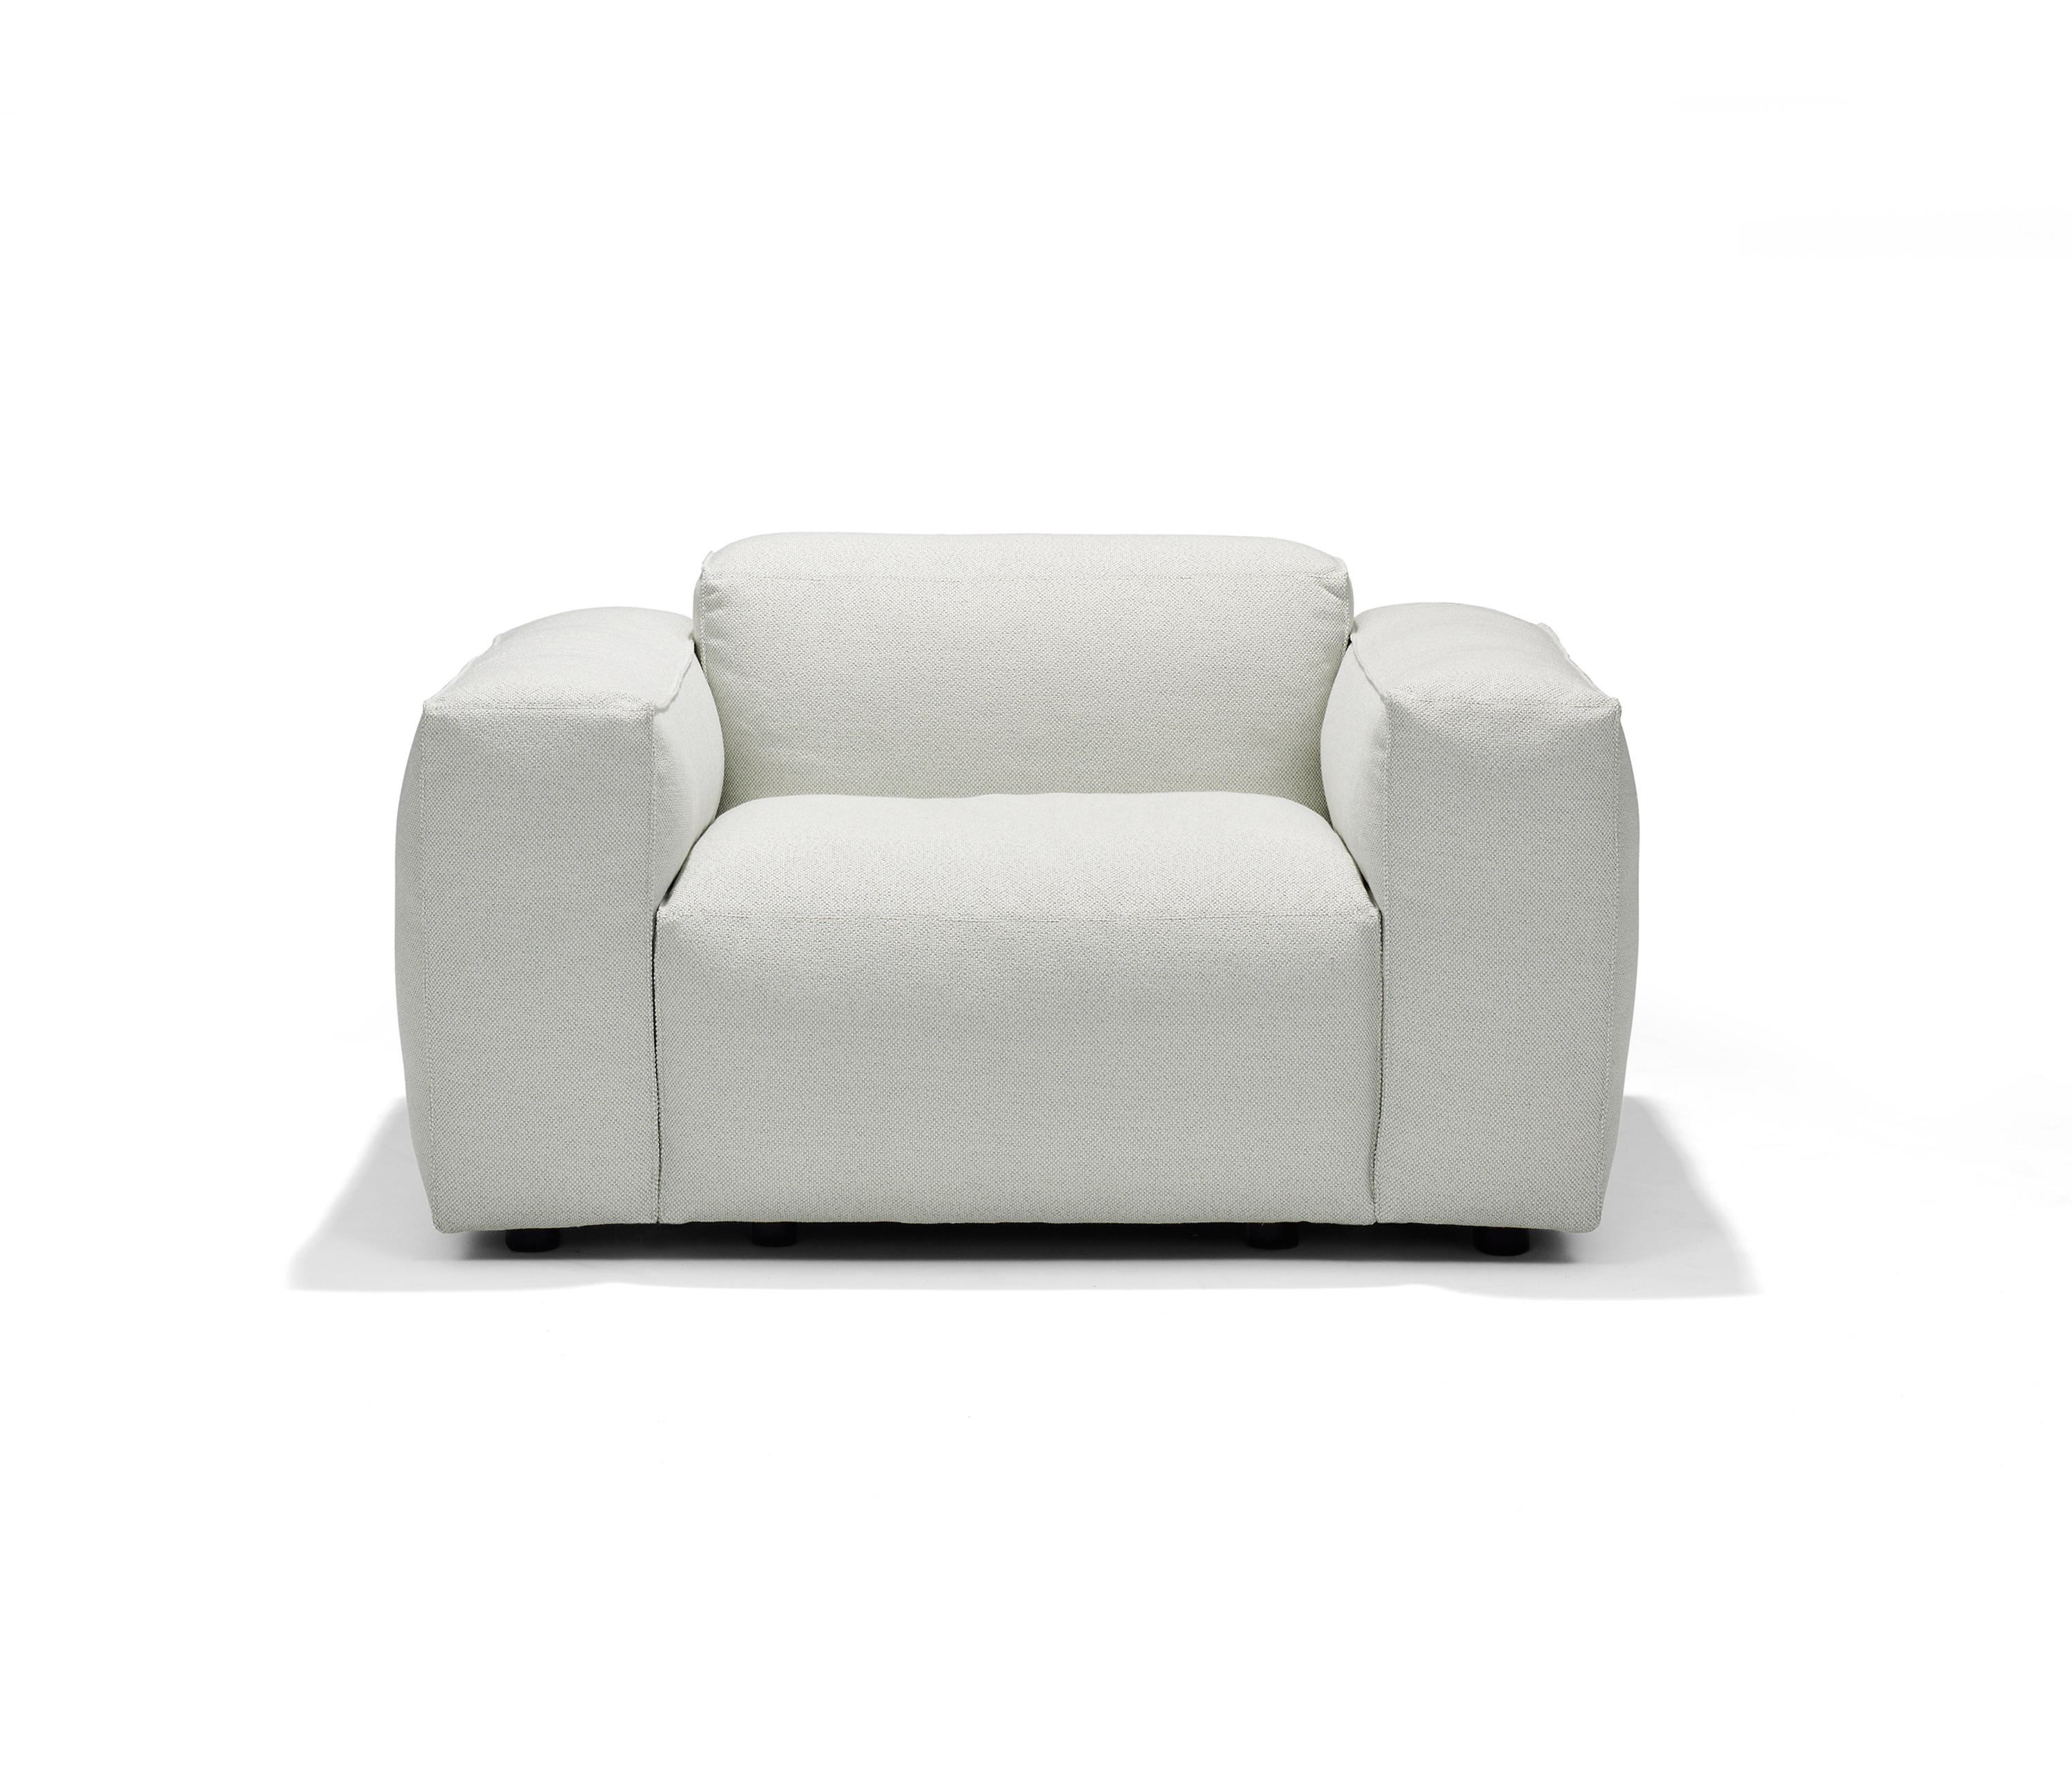 Southampton armchair & designer furniture | Architonic